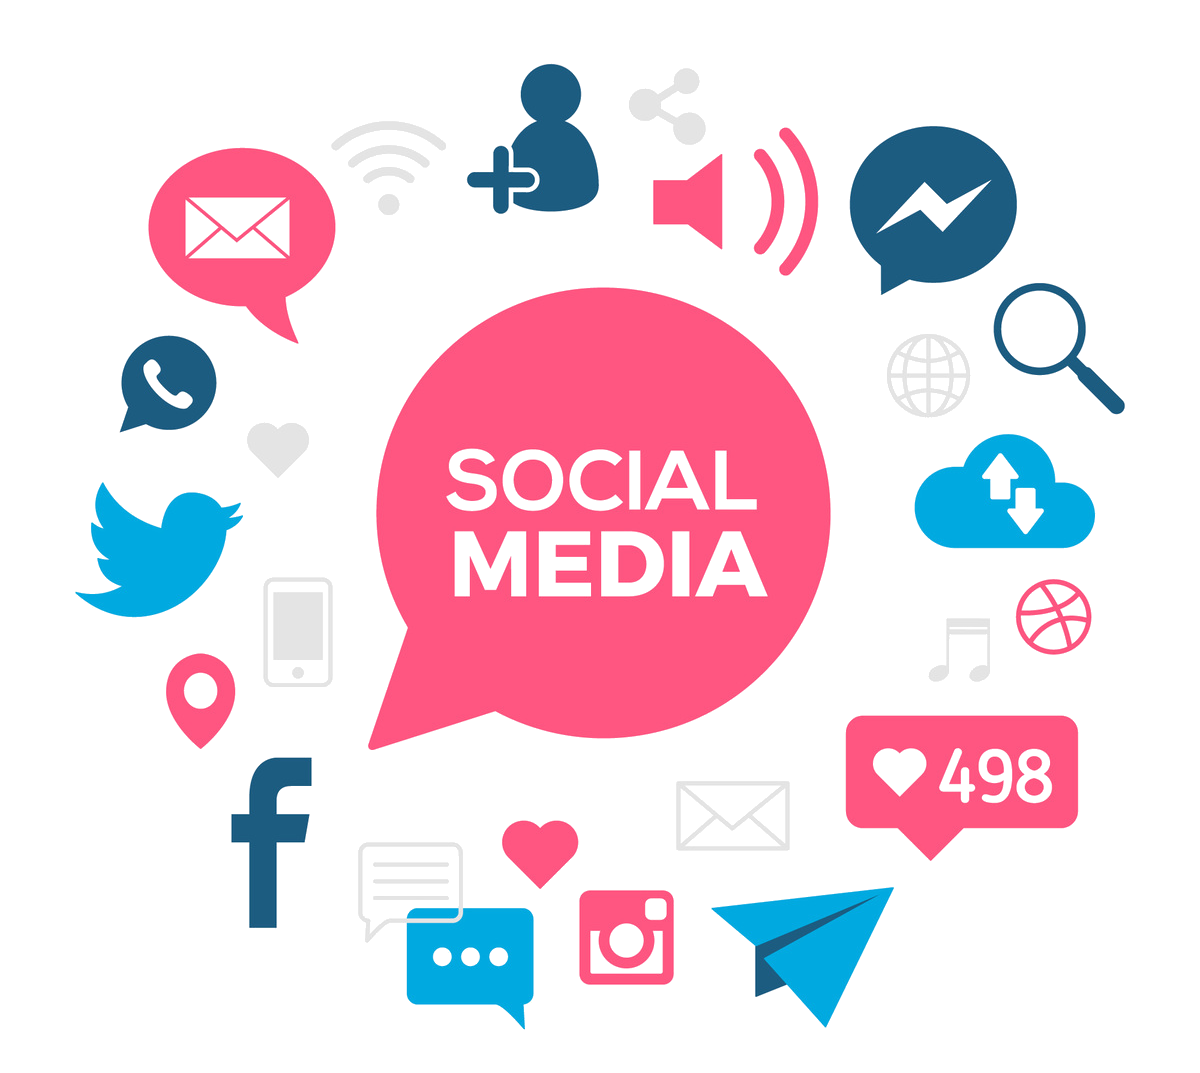 Social Media Marketing Agency in Hyderabad - Digigroxperts